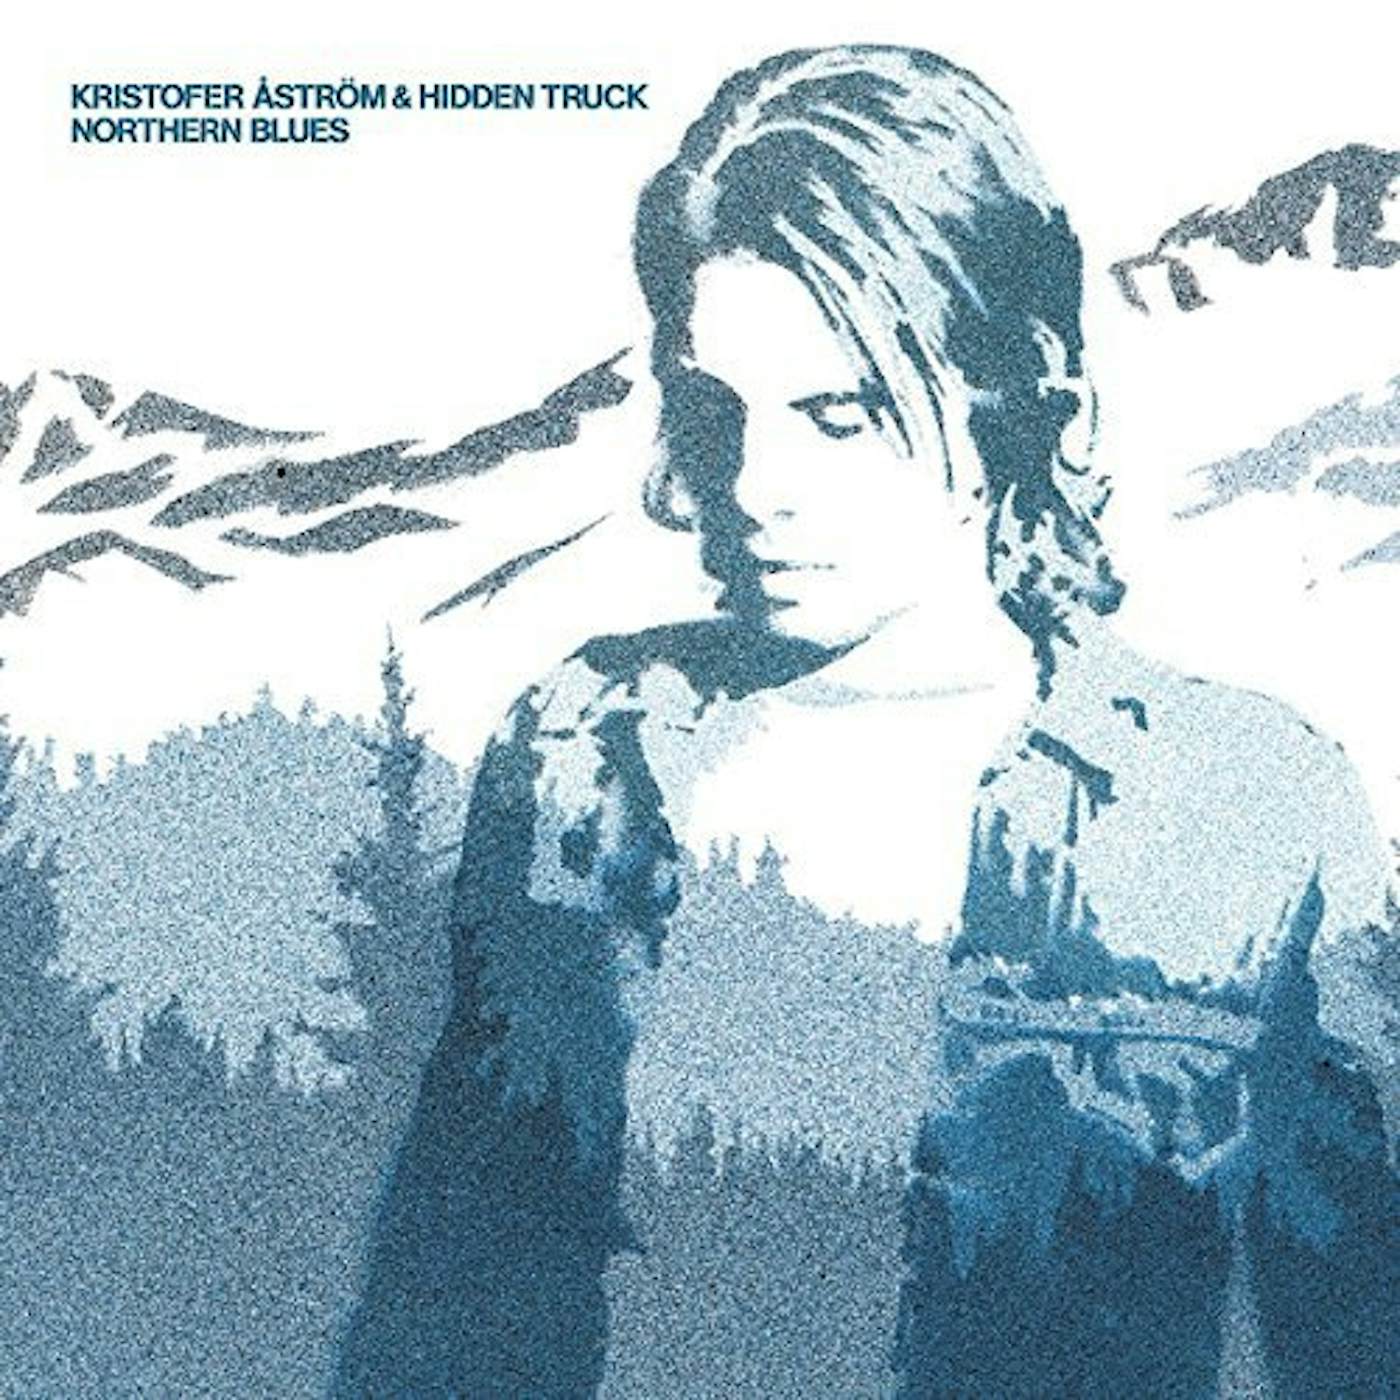 Kristofer Astrom & Hidden Truck Northern Blues Vinyl Record